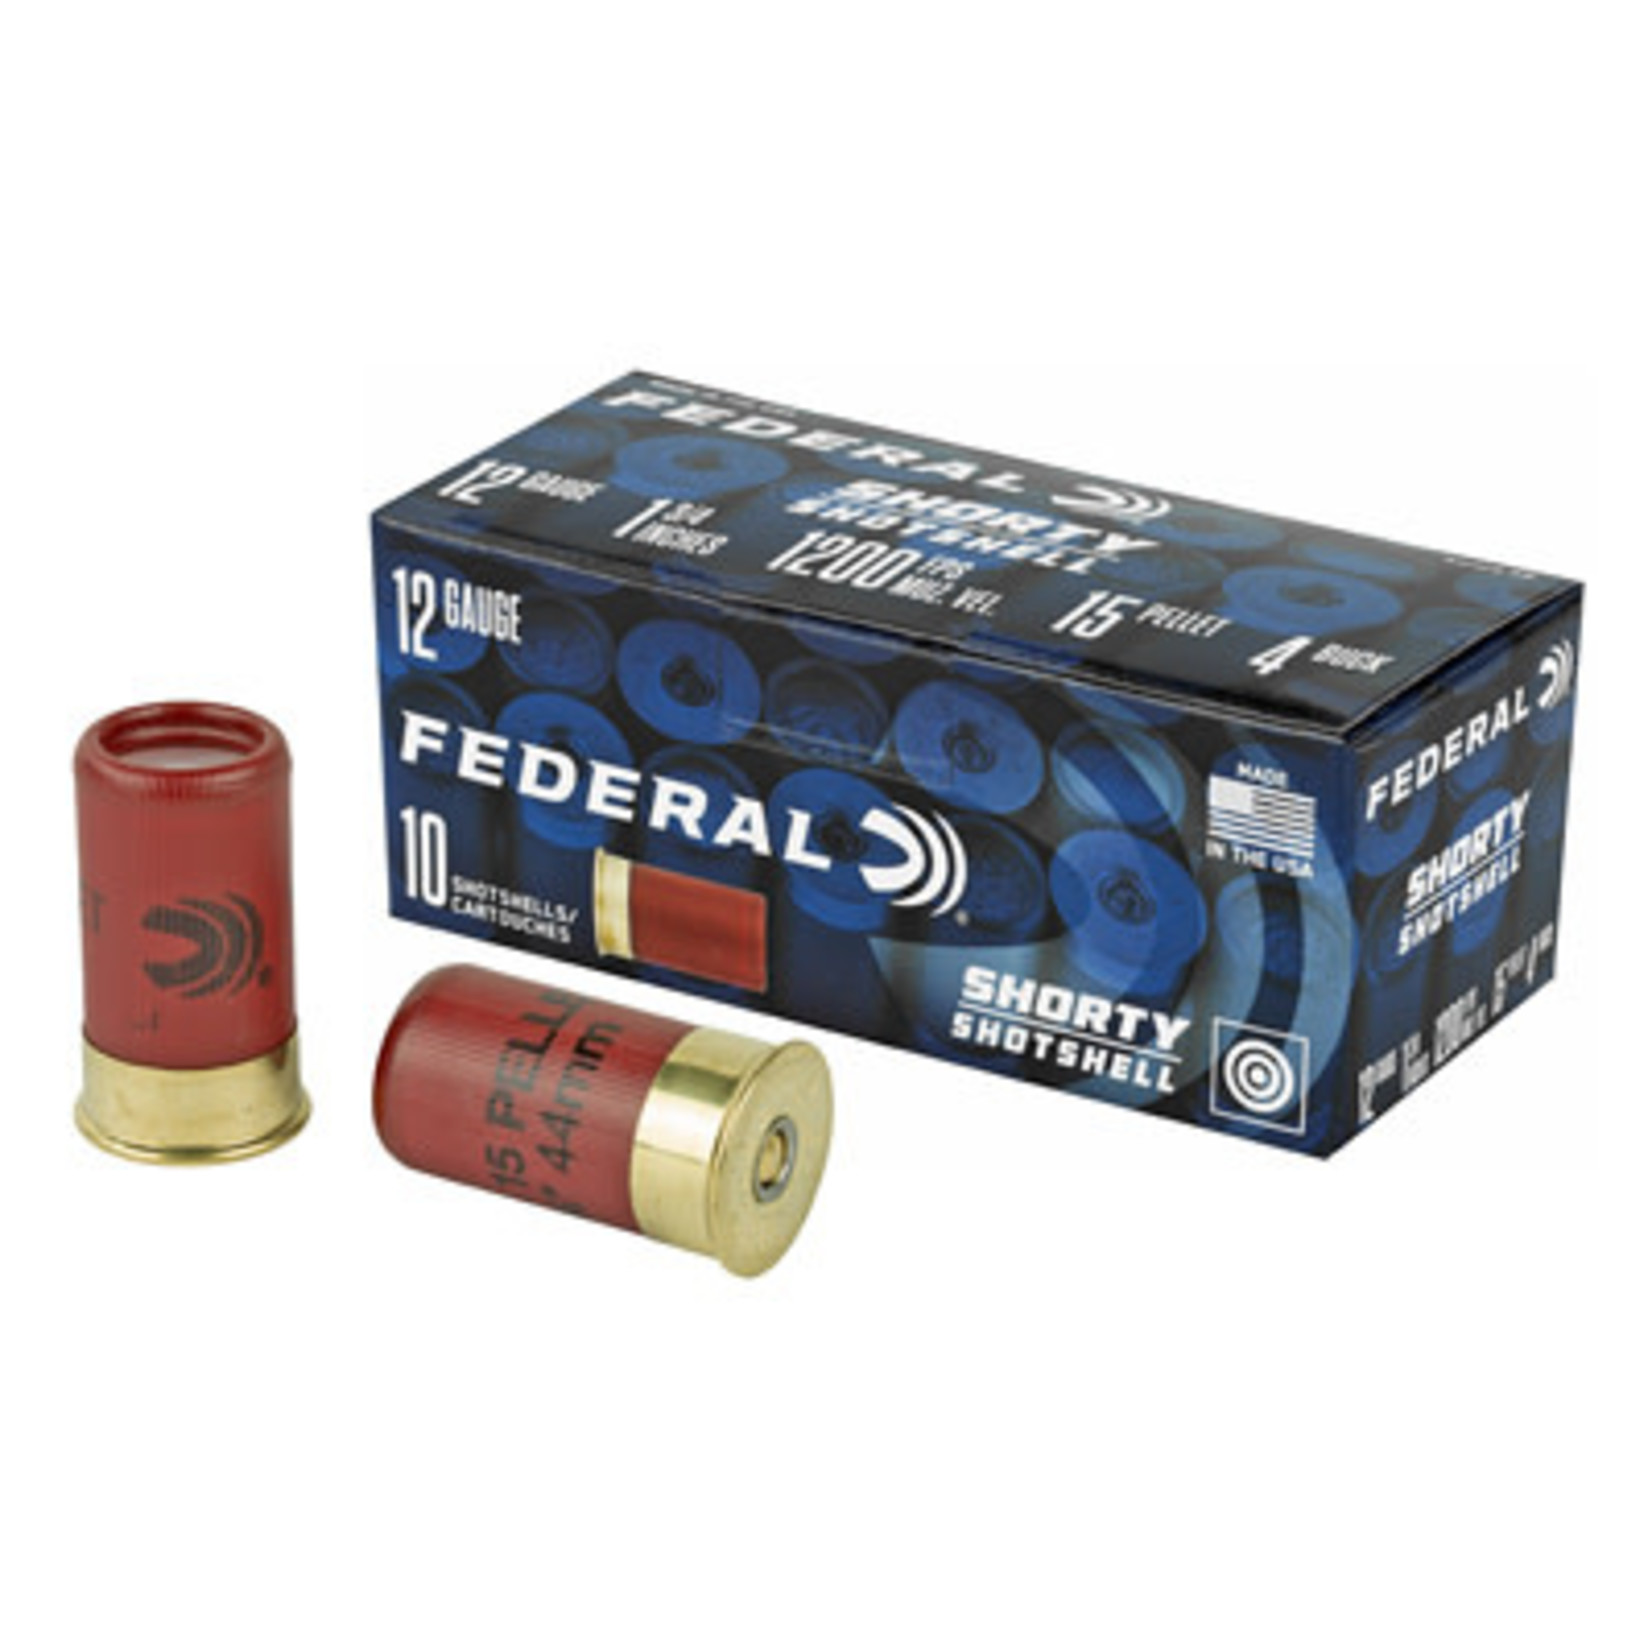 FEDERAL Munitions Federal Shorty Shotshell Cal.12 1-3/4" #4Buck